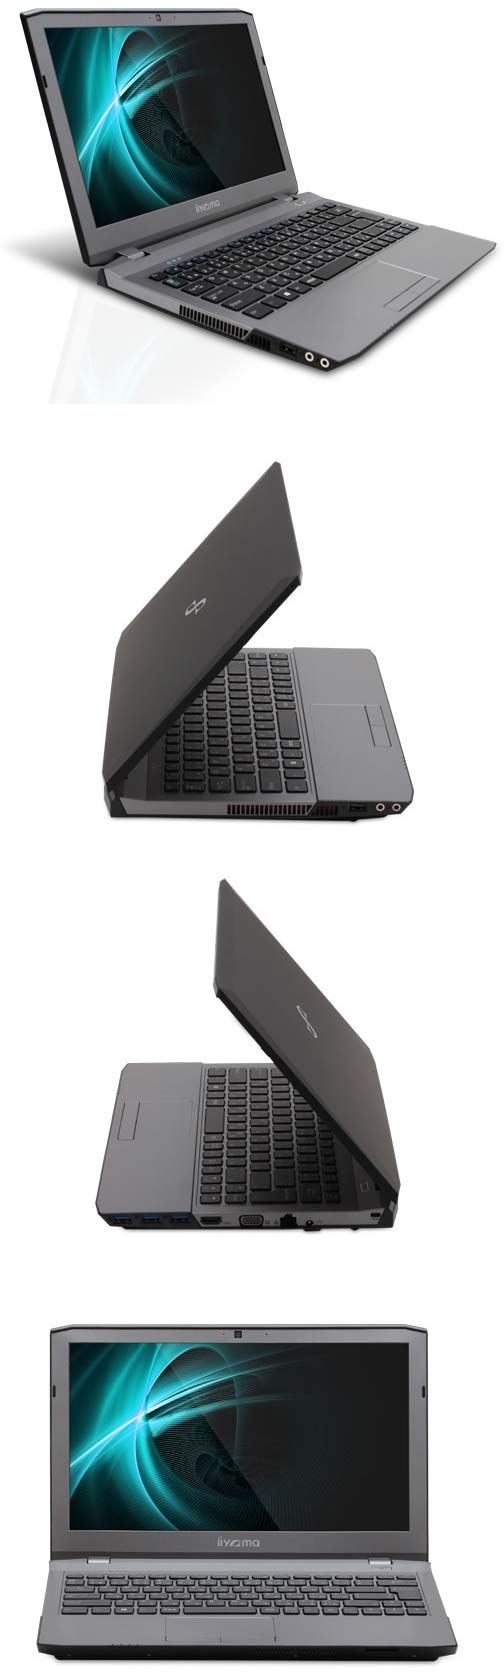 Новый ноутбук от Iiyama - 13X7000-i7-VGB